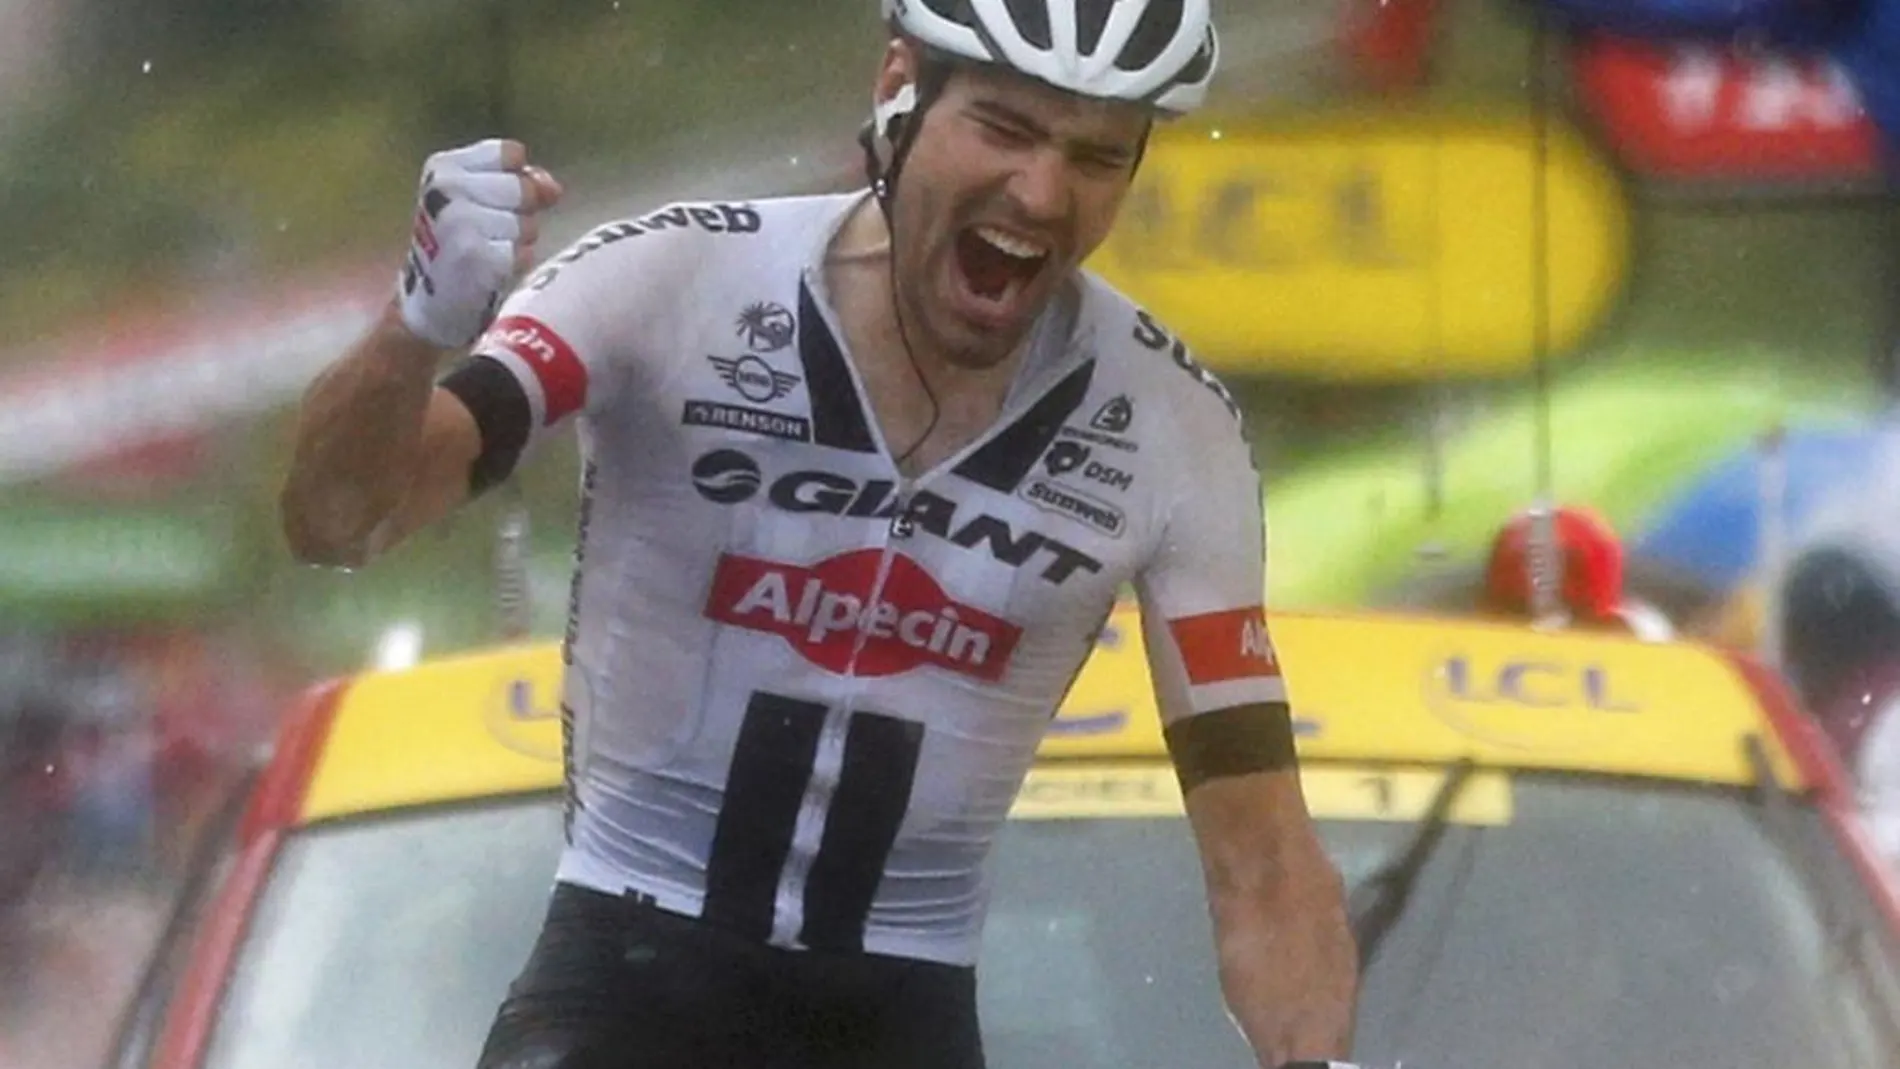 El holandés Tom Dumoulin gana la etapa en Arcalis.